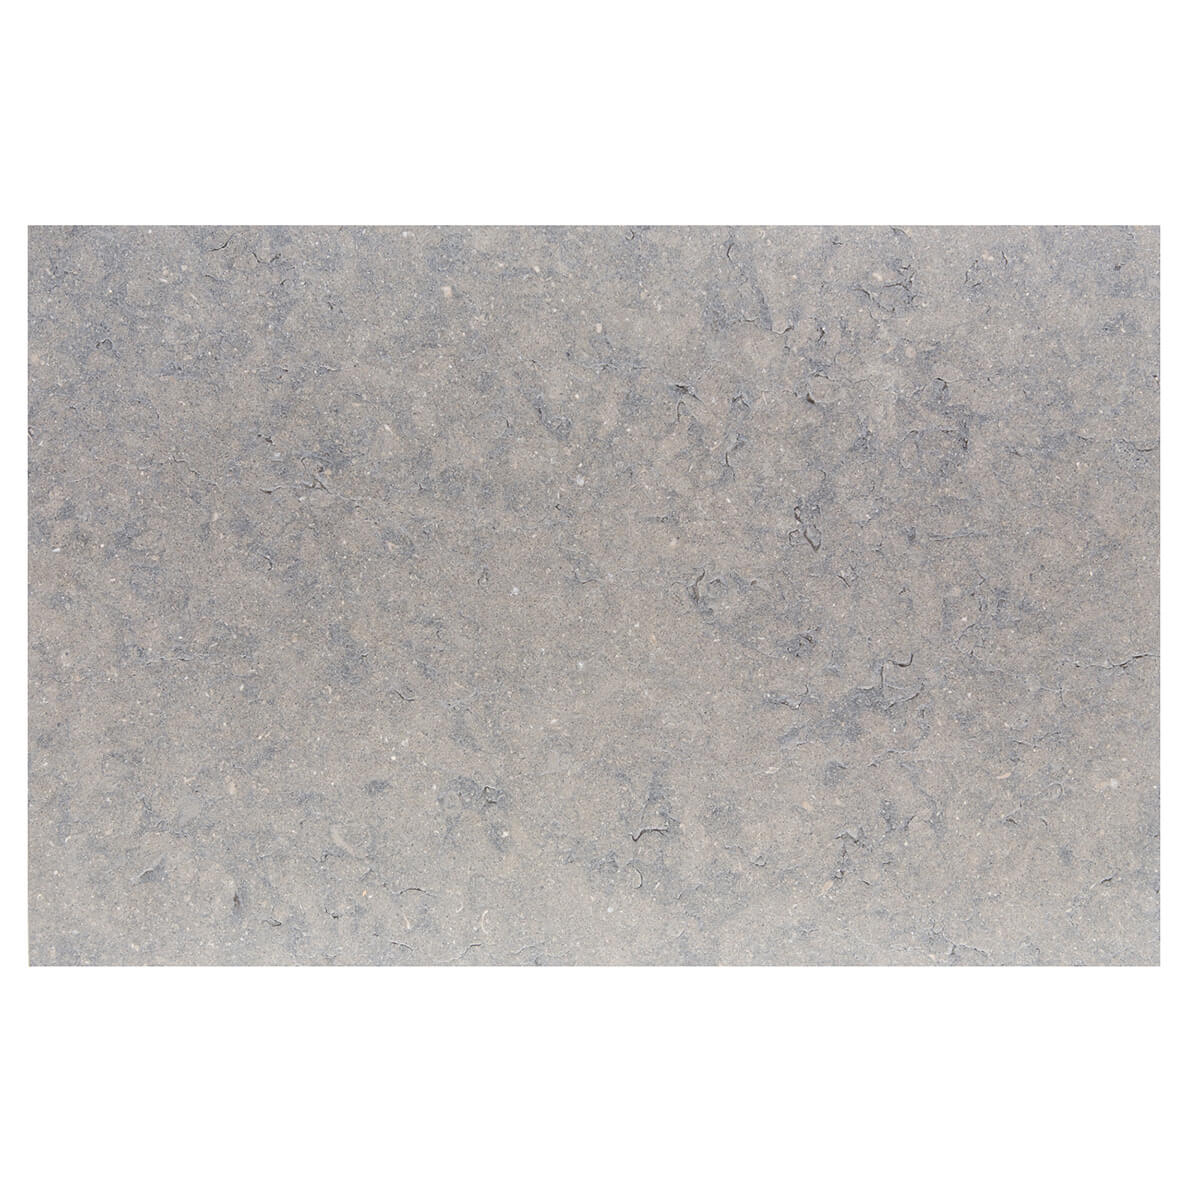 haussmann cote d azur limestone rectangle natural stone field tile 16x24 leather